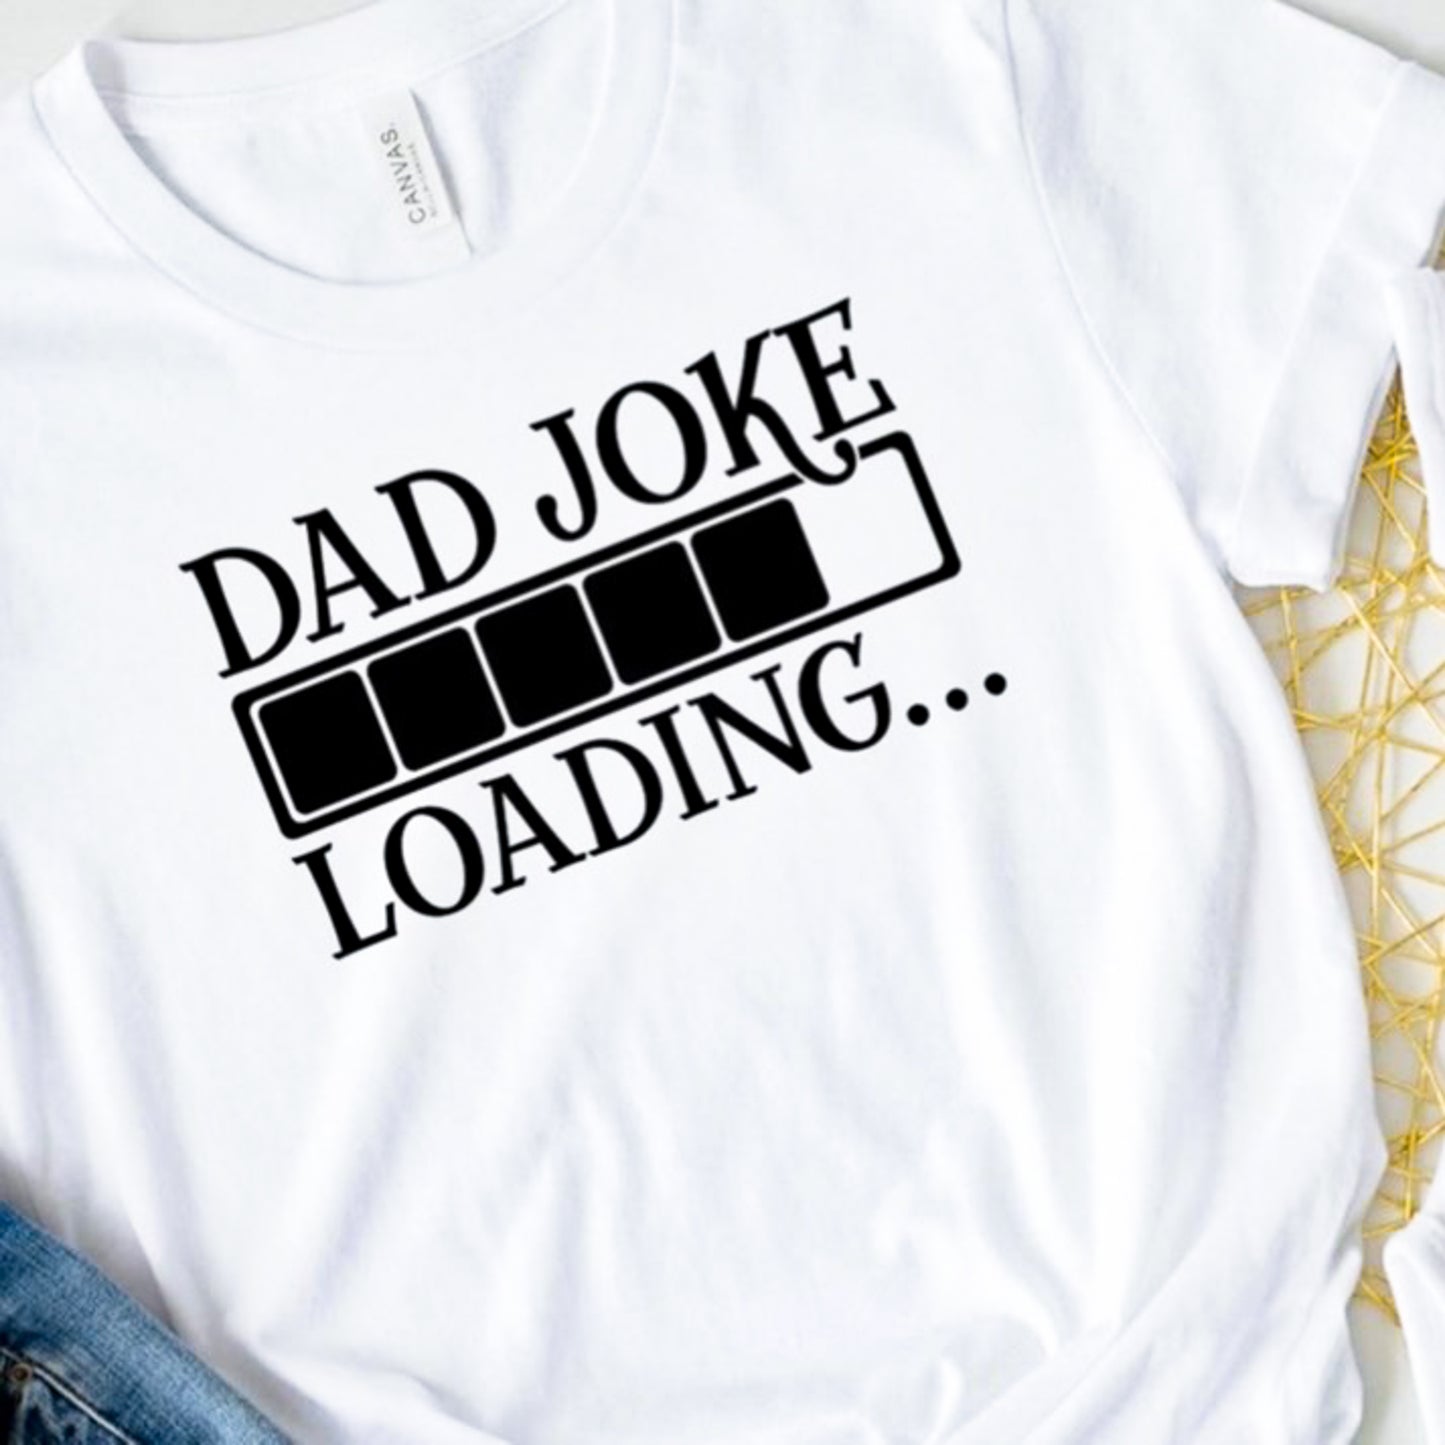 Dad Joke Loading T-Shirt or Crew Sweatshirt